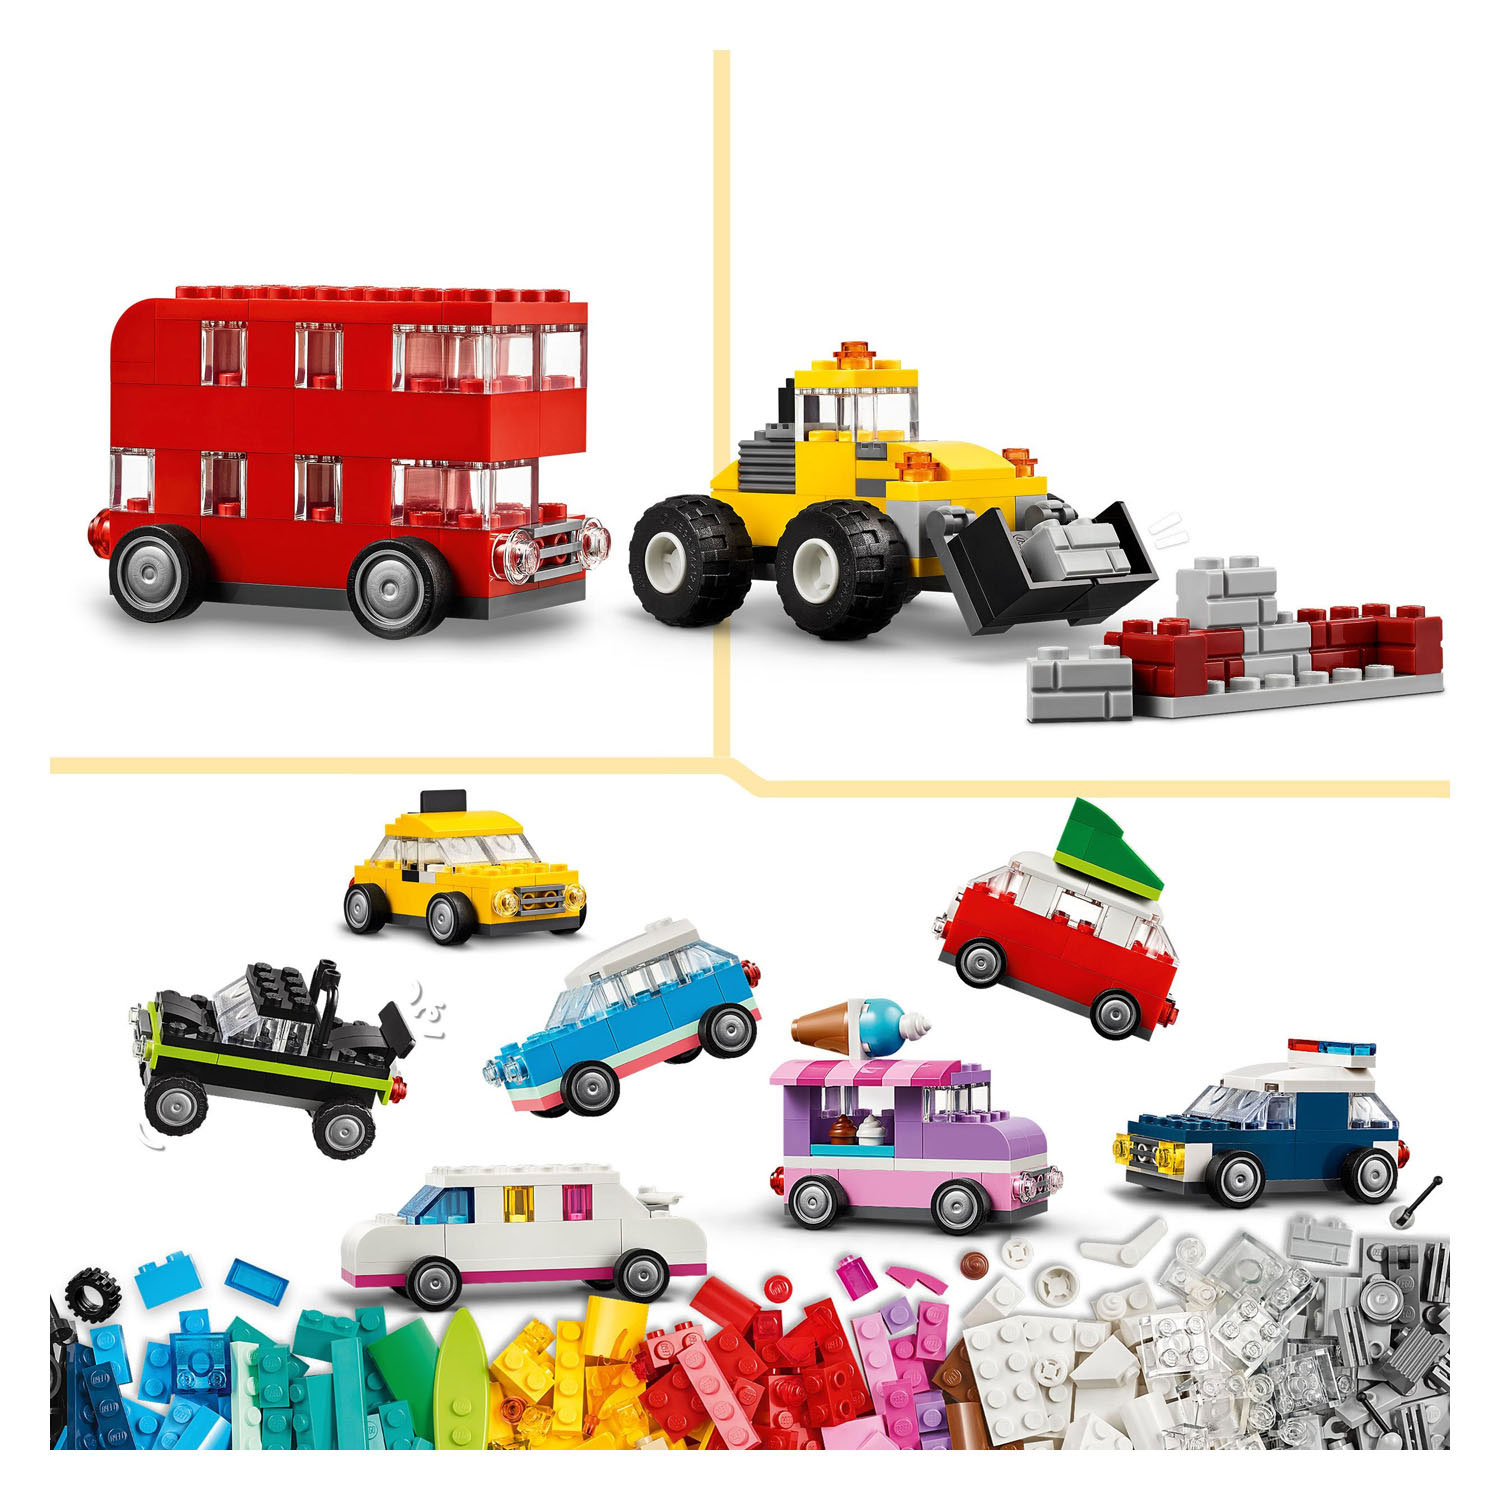 LEGO Classic 11036 Kreativfahrzeuge